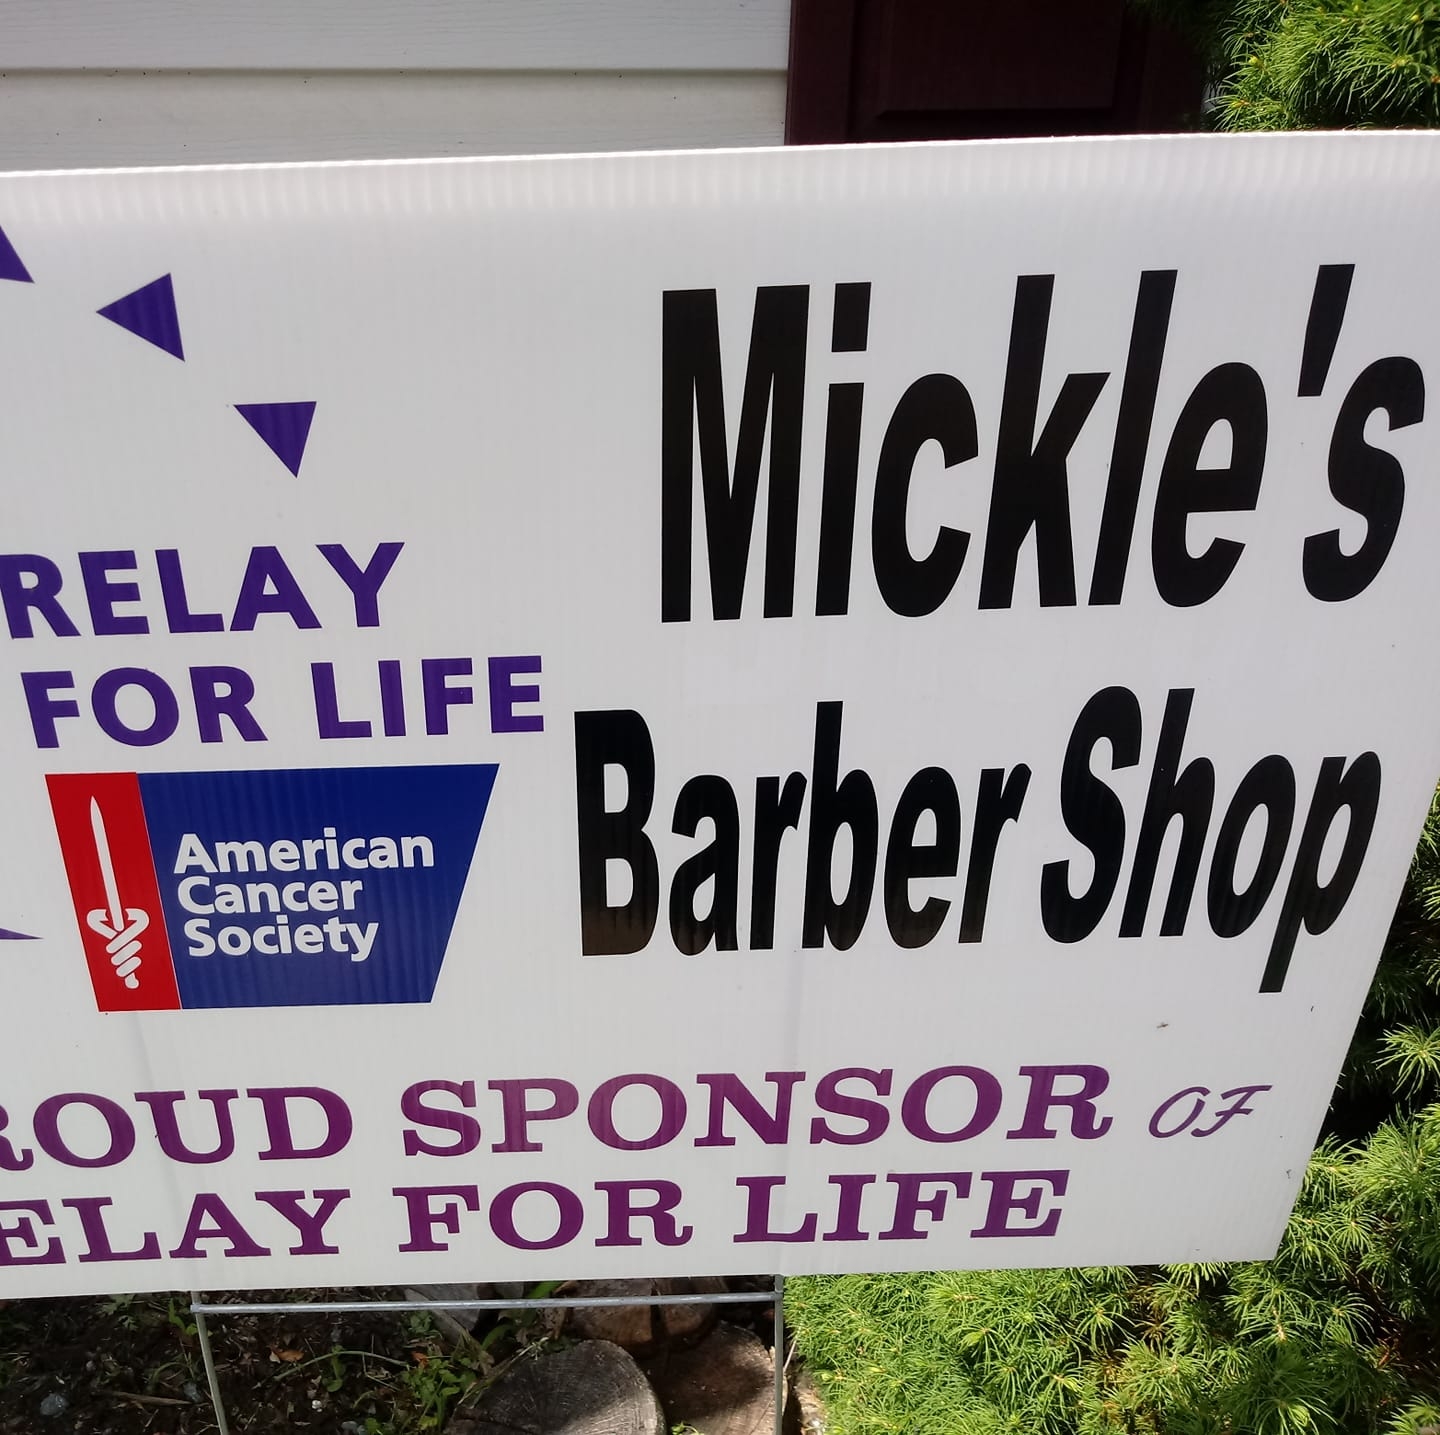 Mickle's Barber Shop 1819 Quaker Valley Rd, Fishertown Pennsylvania 15539